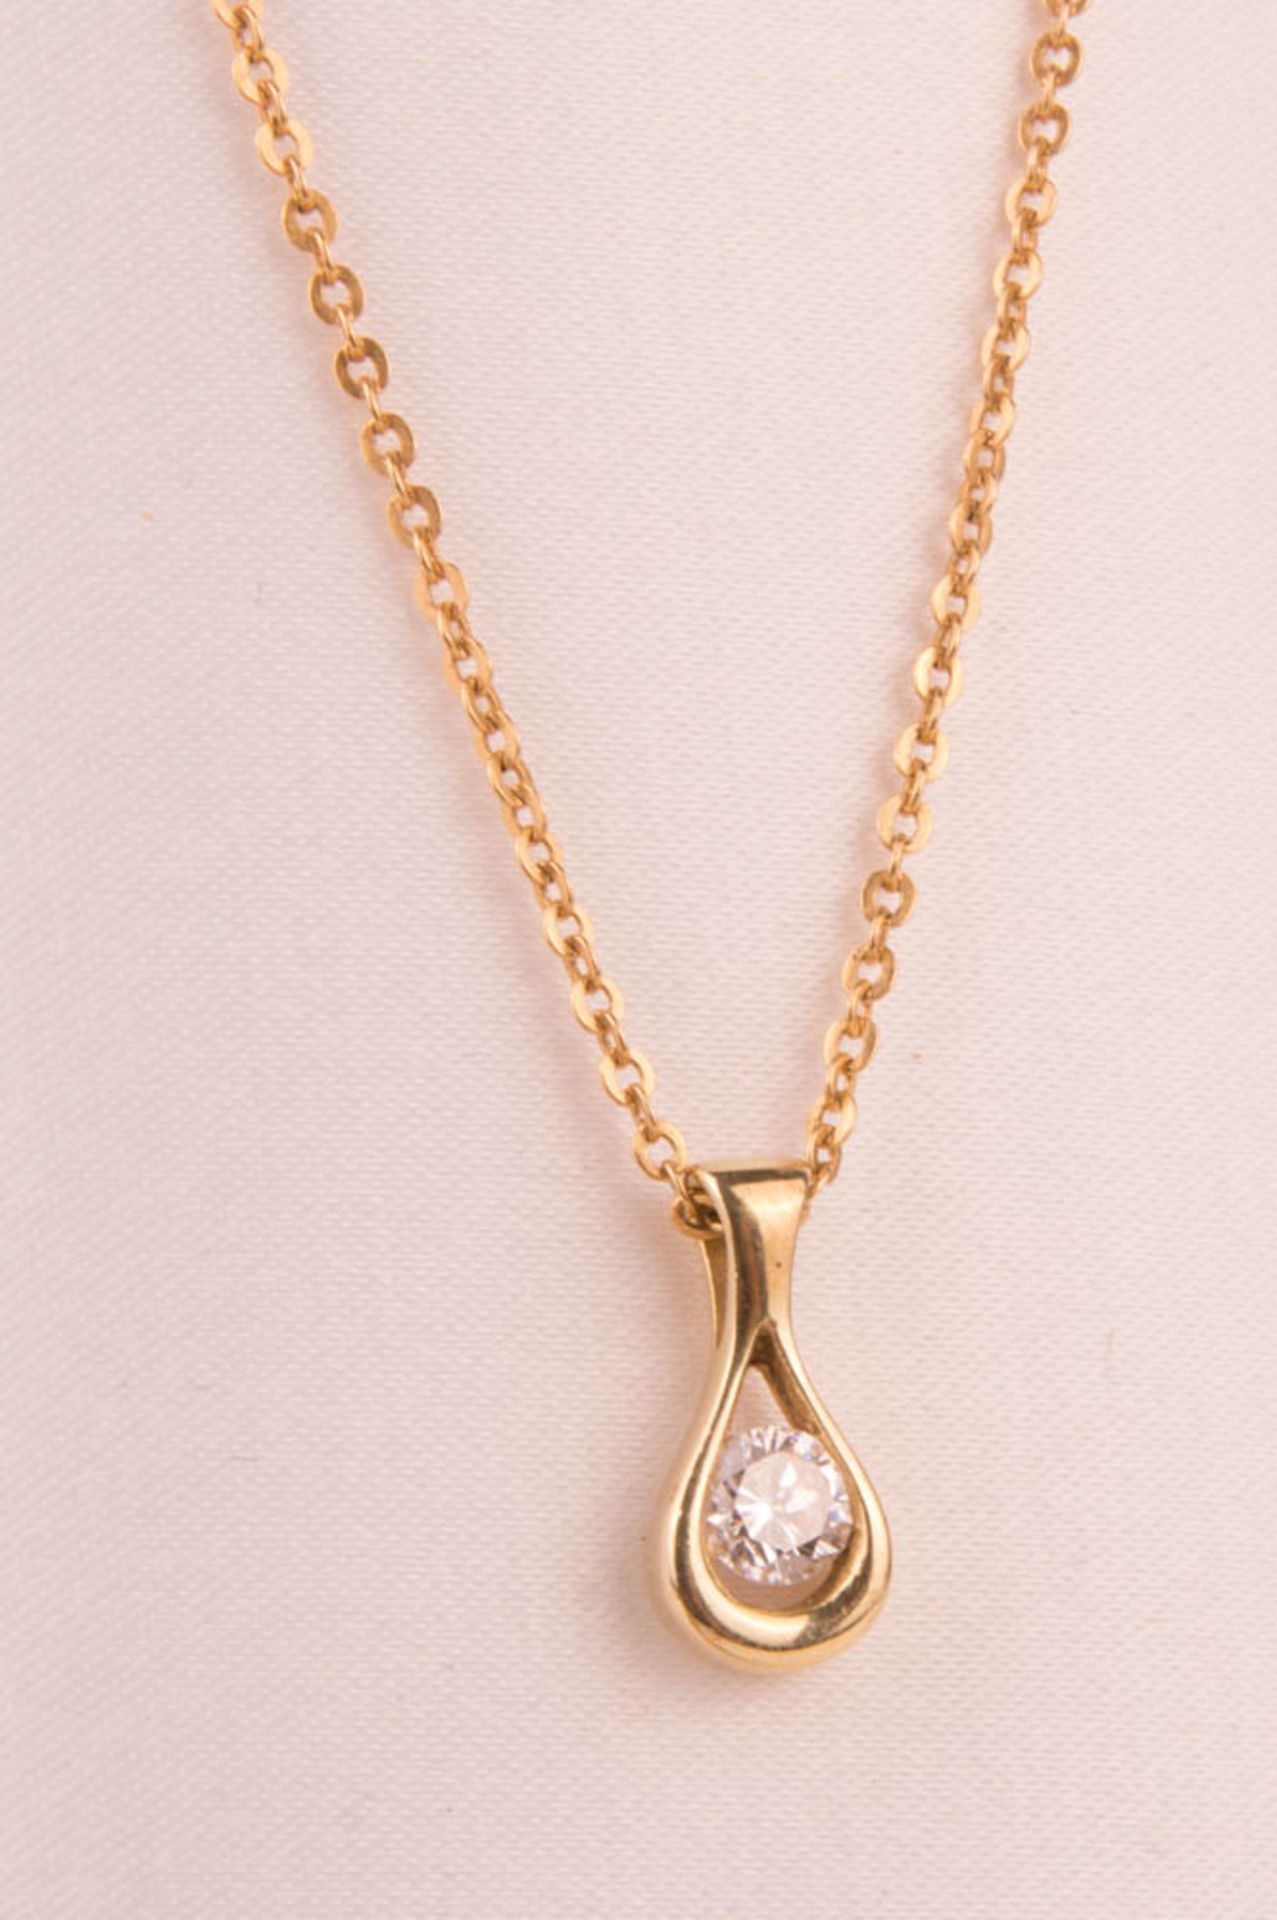 Chain with diamond pendant, 750 yellow gold.